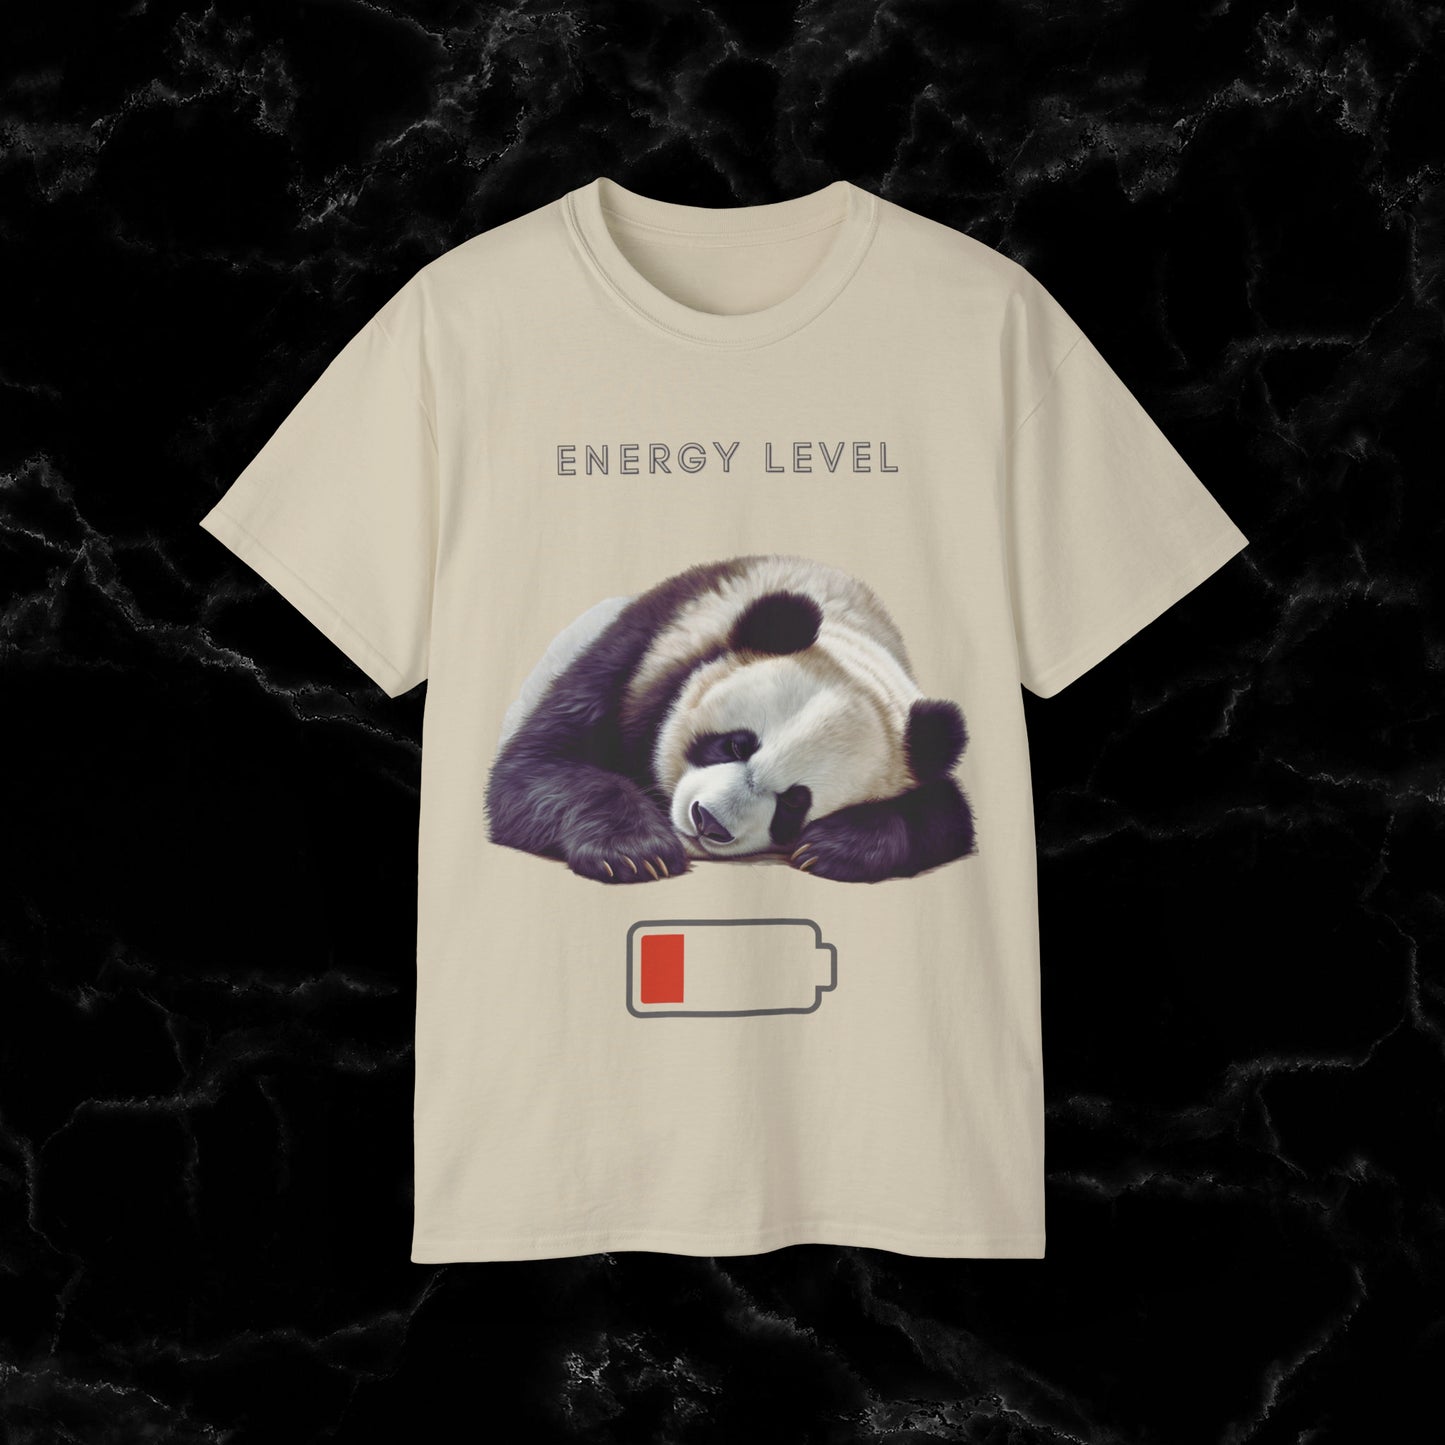 Nap Time Panda Unisex Funny Tee - Hilarious Panda Nap Design - Energy Level T-Shirt Sand M 